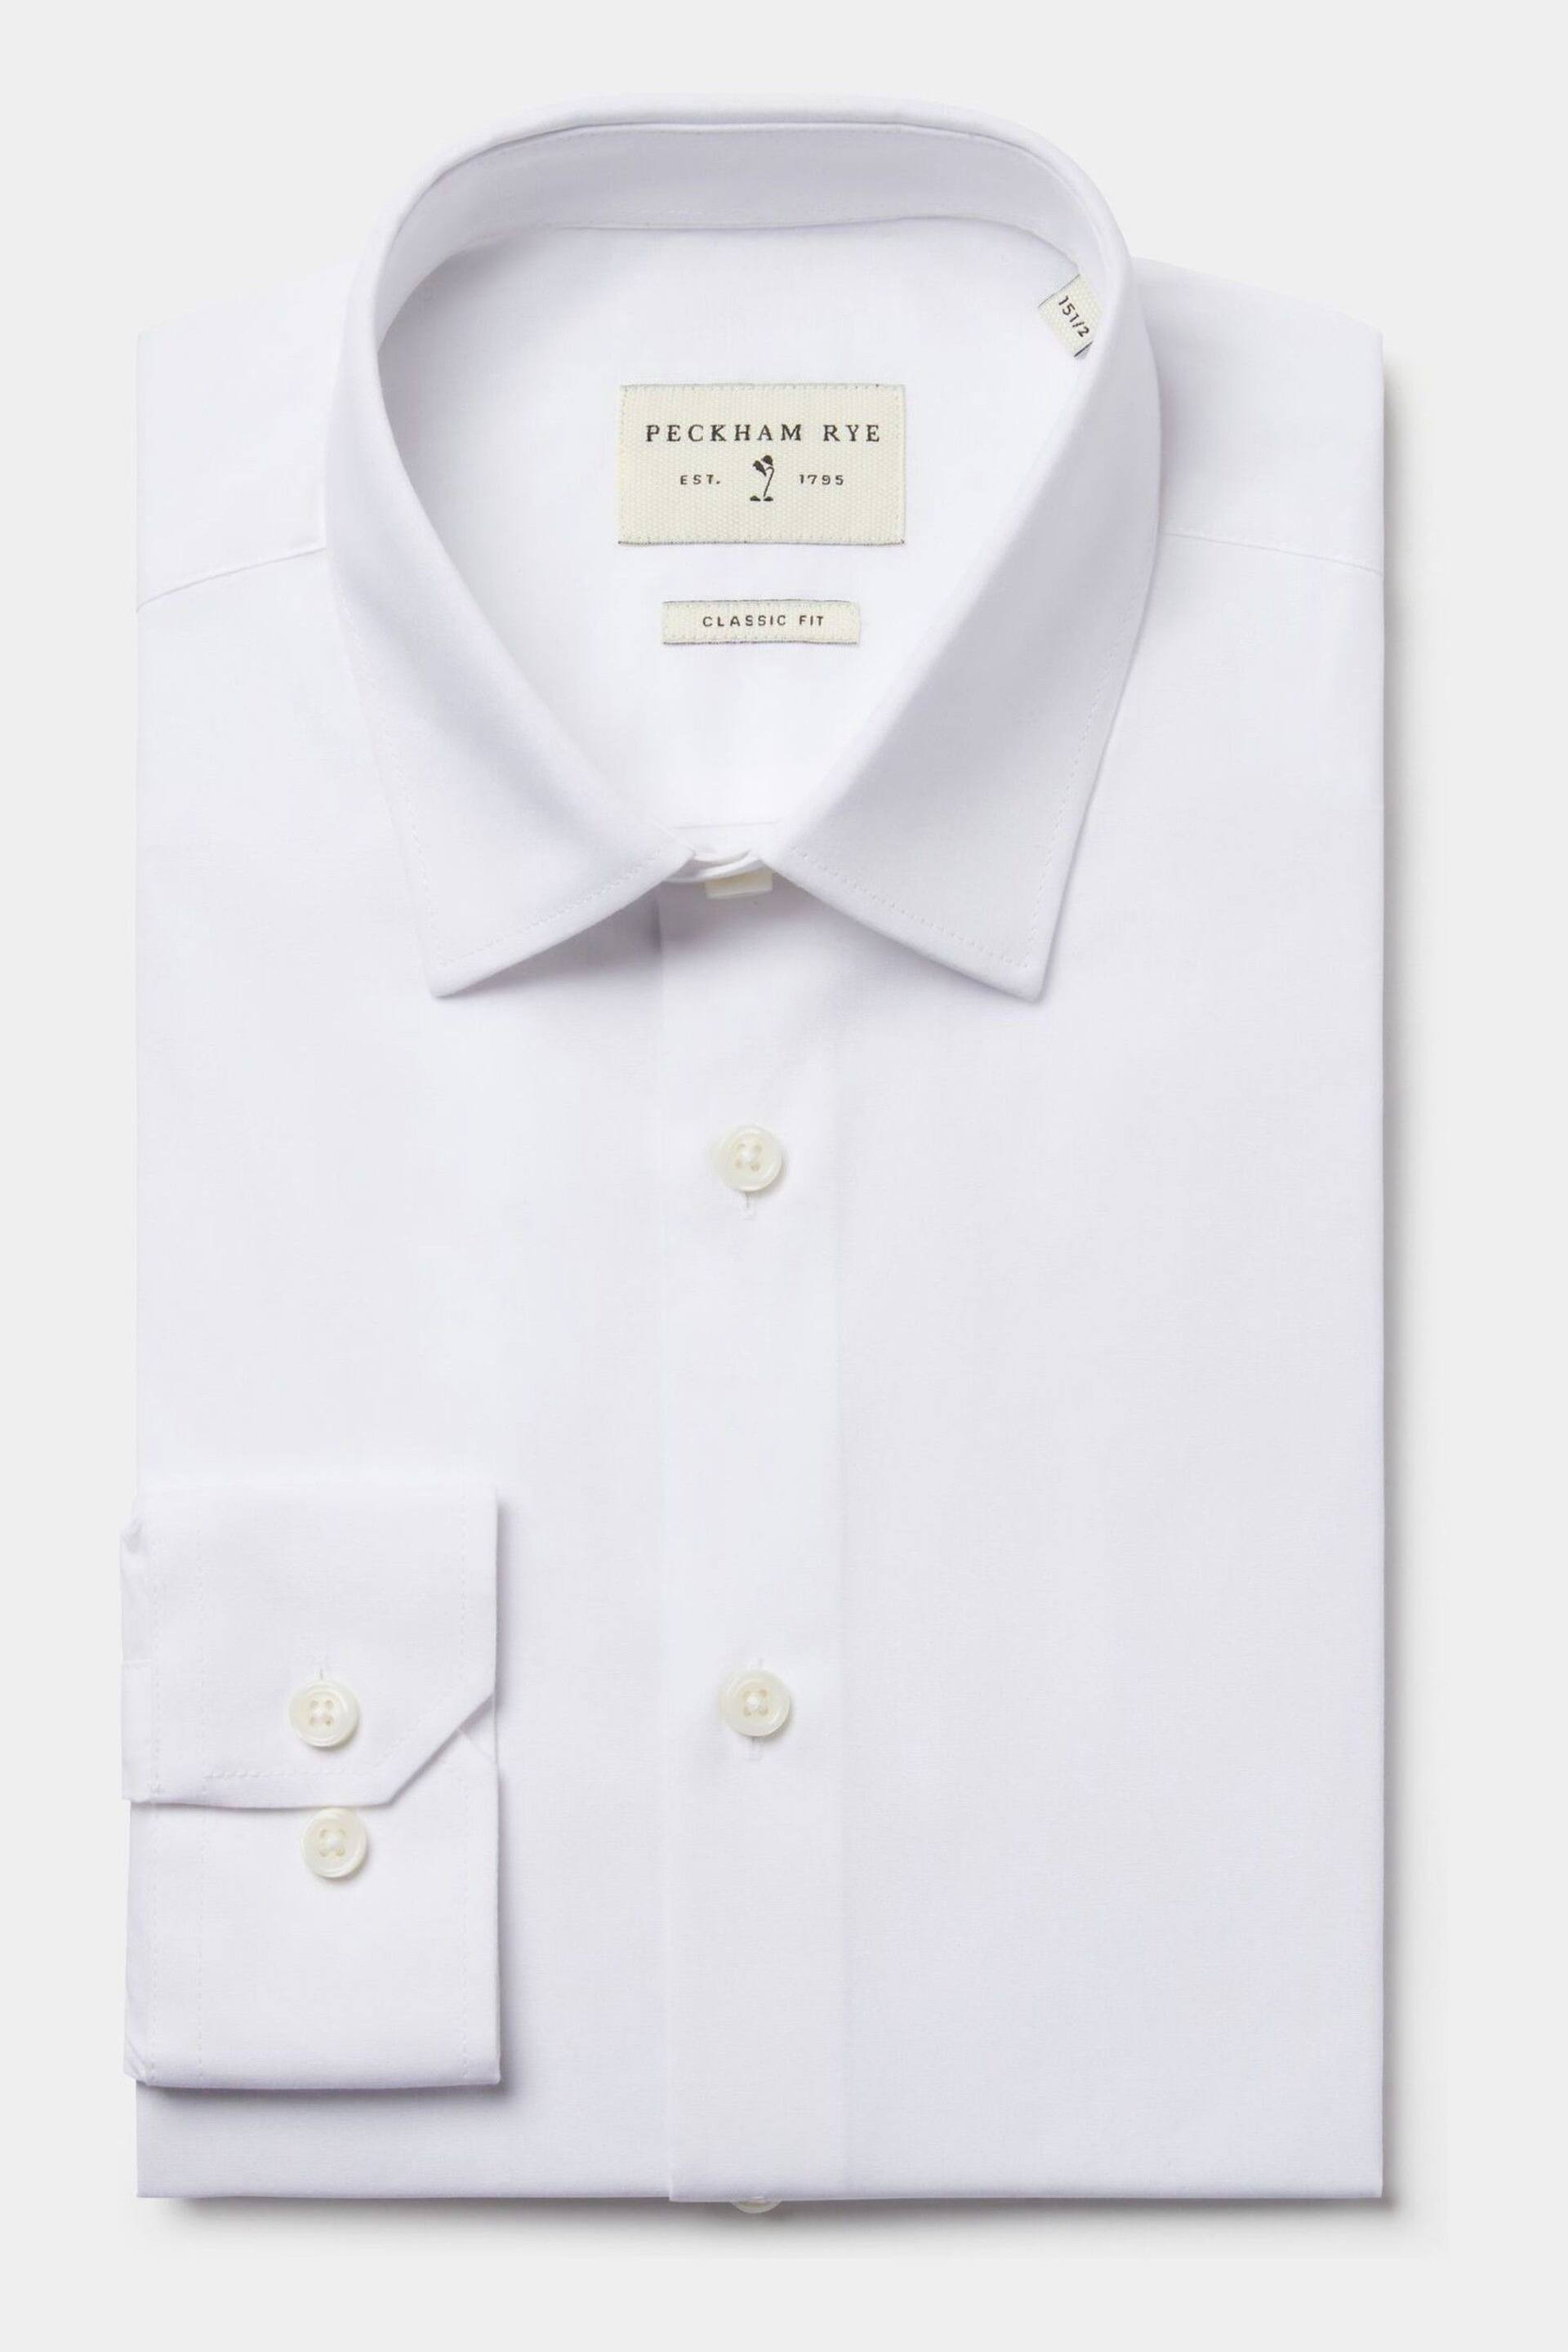 Peckham Rye Poplin Long Sleeve Shirt - Image 4 of 6